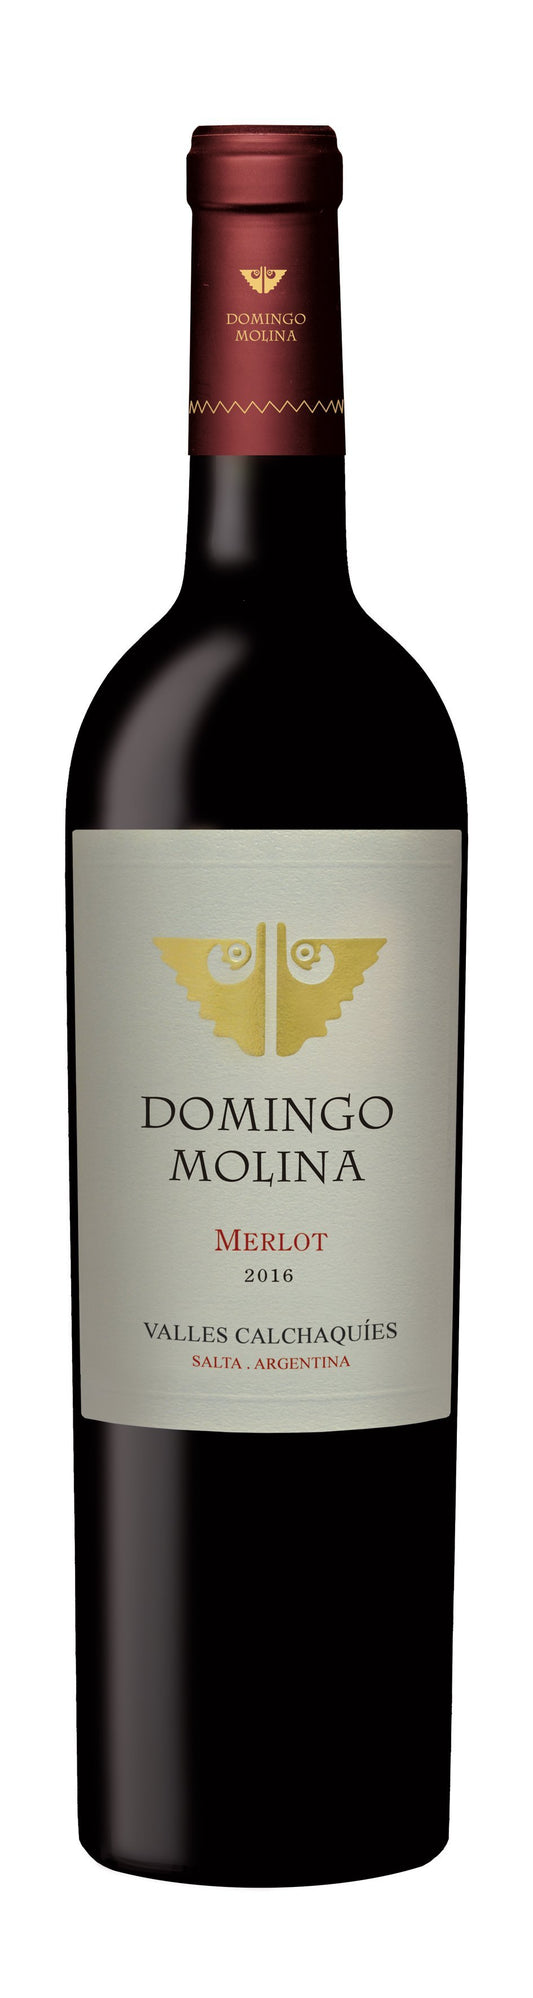 Domingo Molina Merlot - Mi-bodeguita.com